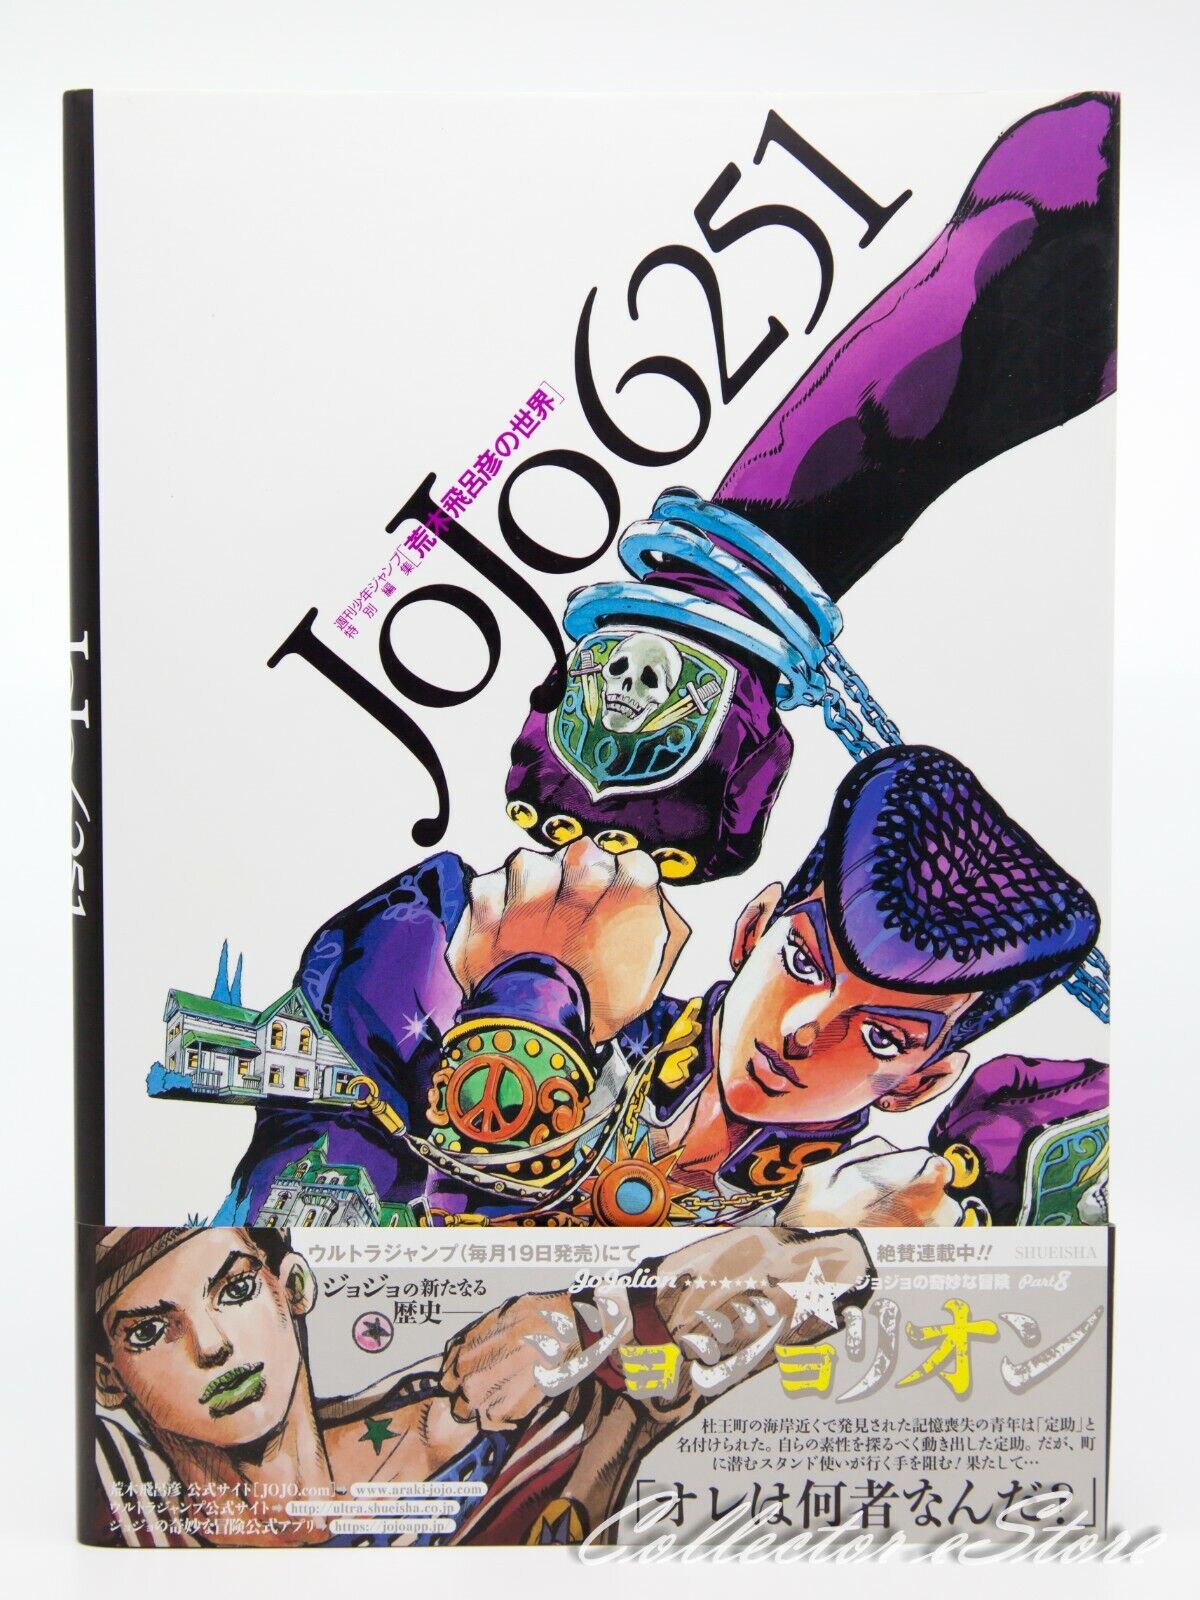 JOJO 6251 World of Hirohiko Araki Hardcover Art Book (AIR/DHL)